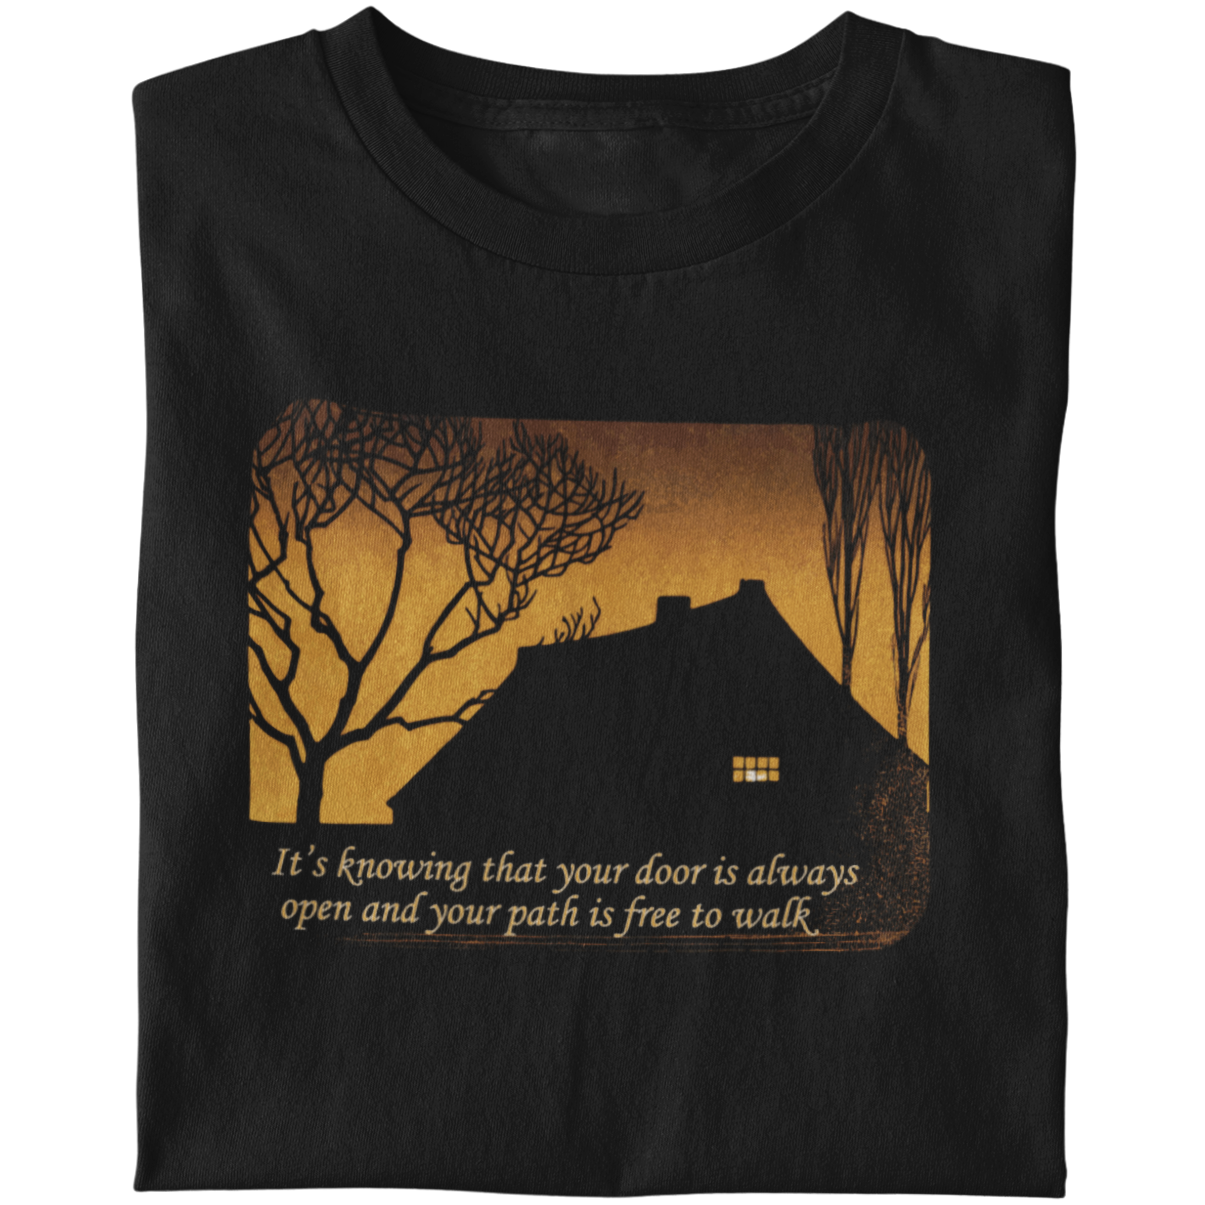 Gentle on My Mind Glen Campbell t-shirt